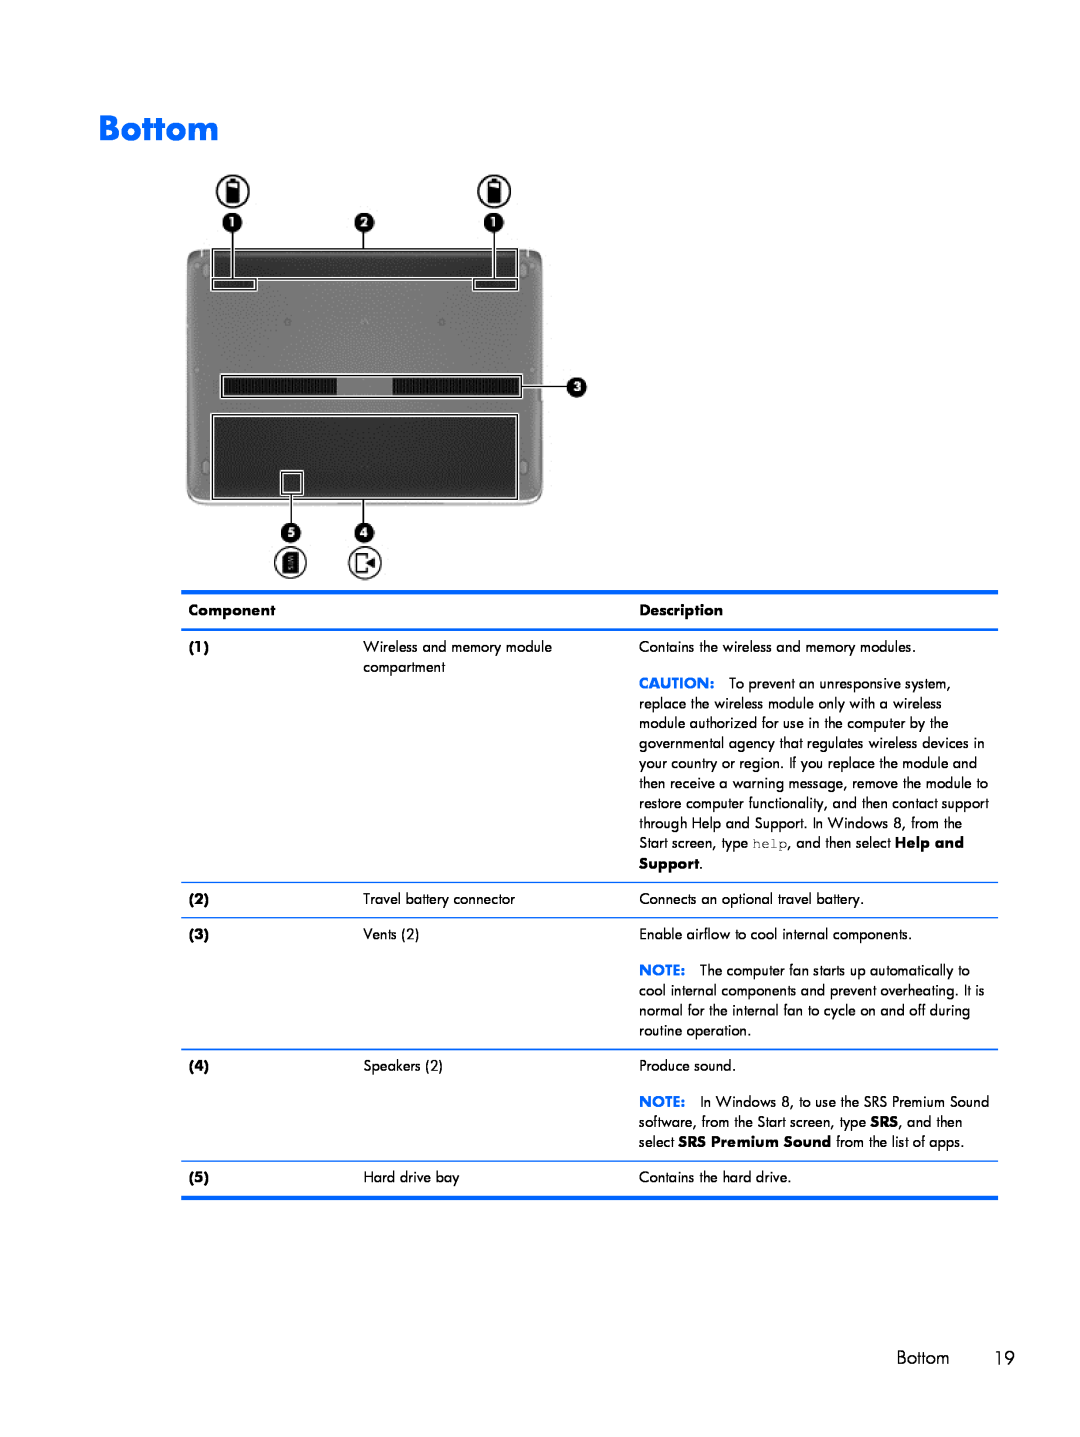 HP 9470m i7 Win8 D3K33UT#ABA manual Bottom, Component, Description, Support 